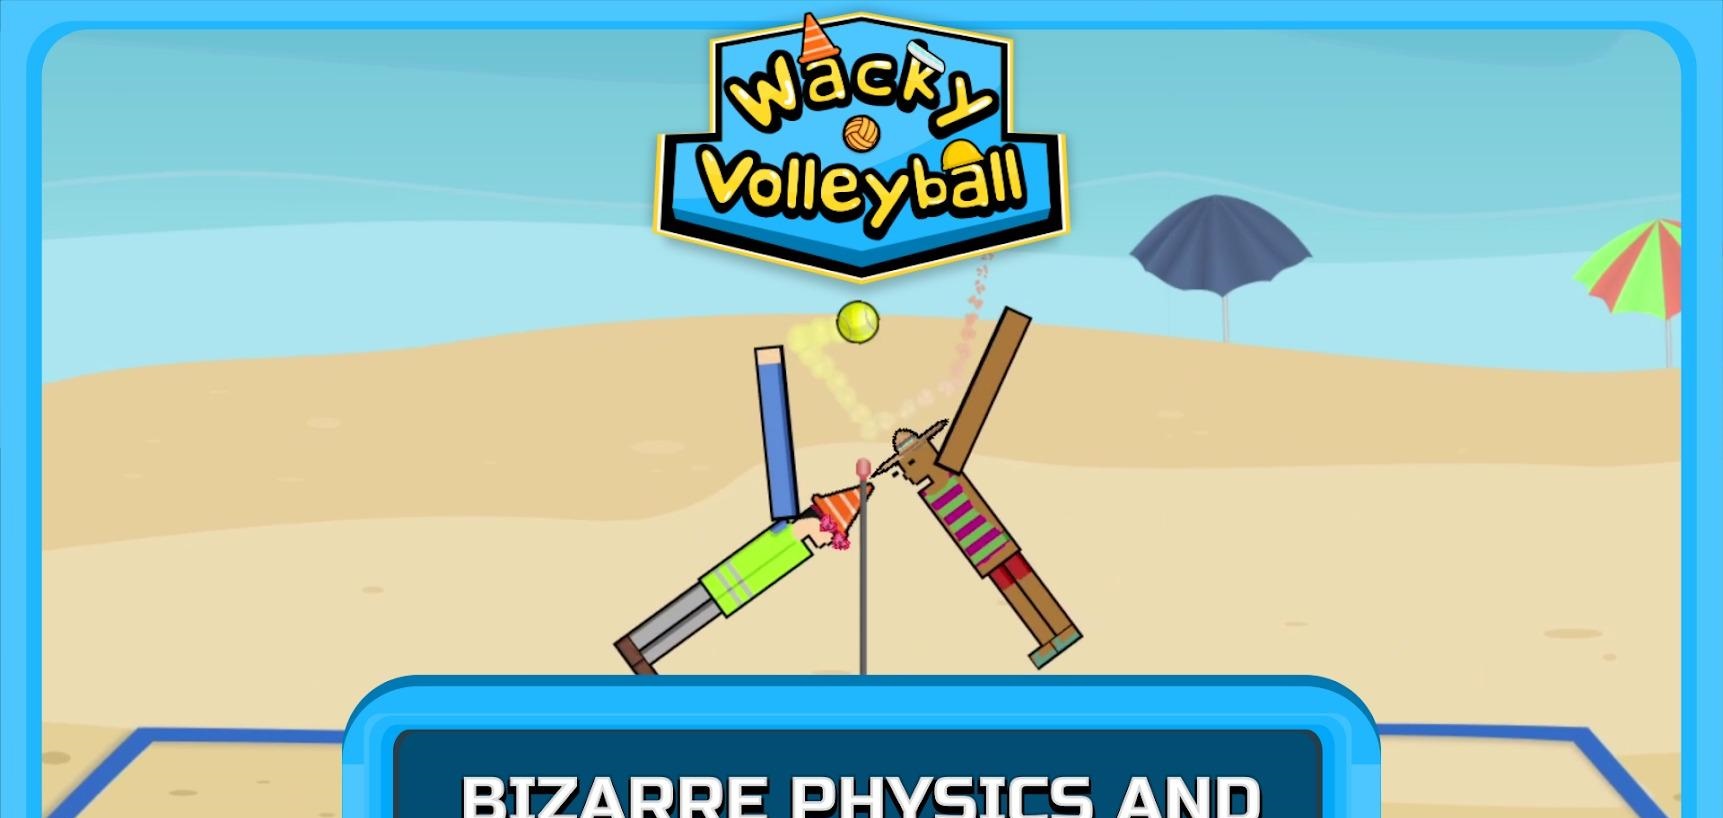 Wacky Volleyball游戏官方安卓版截图2: